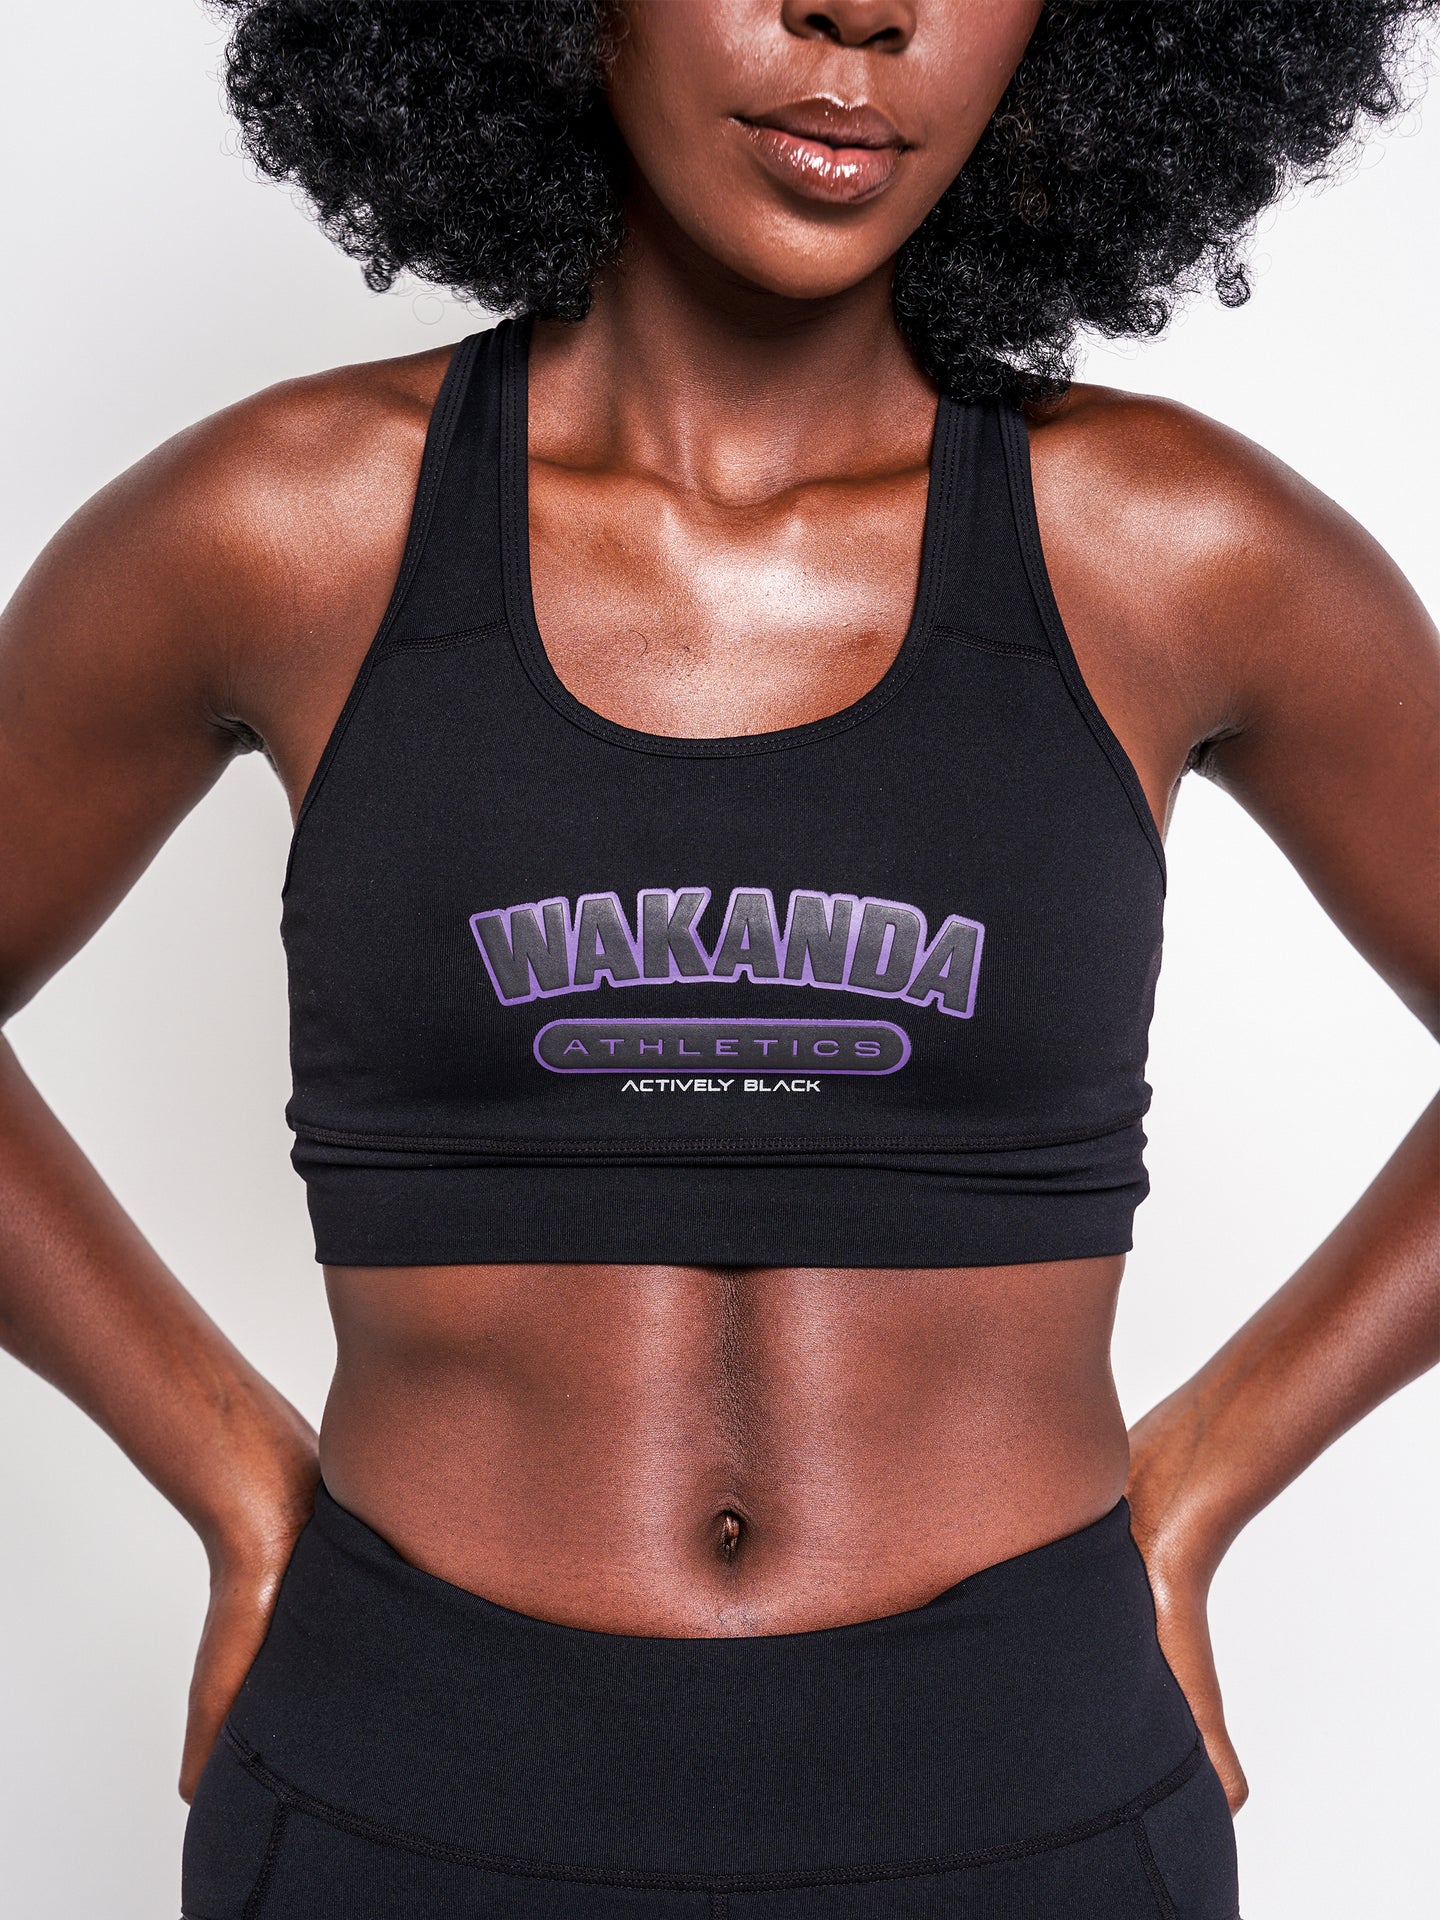 Women's Wakanda Athletics Classic Sports Bra